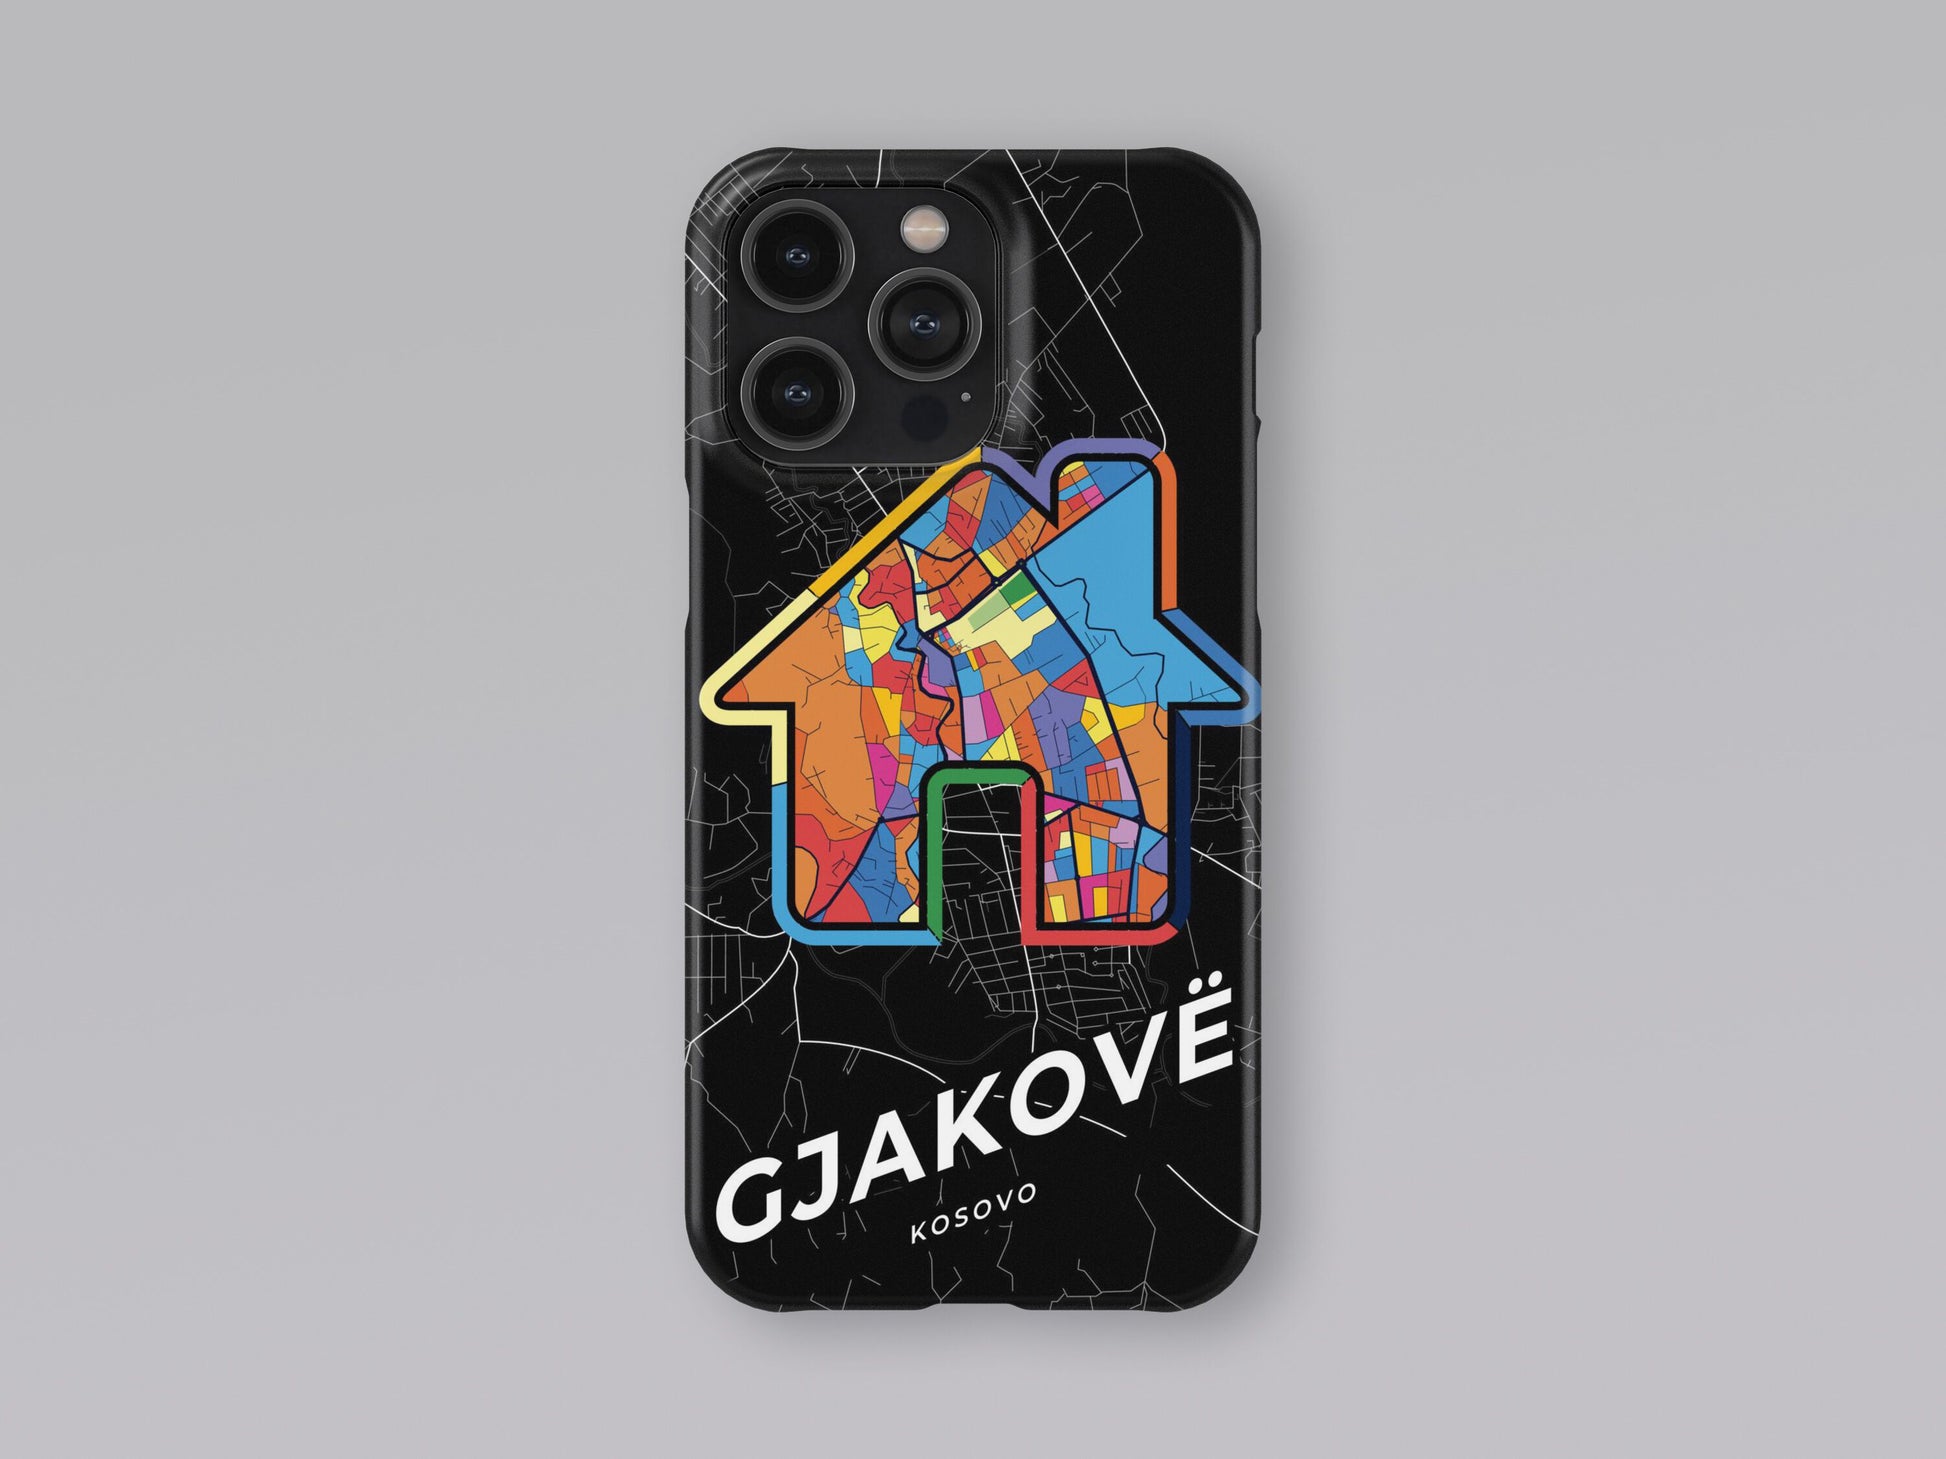 Gjakovë / Đakovica Kosovo slim phone case with colorful icon. Birthday, wedding or housewarming gift. Couple match cases. 3